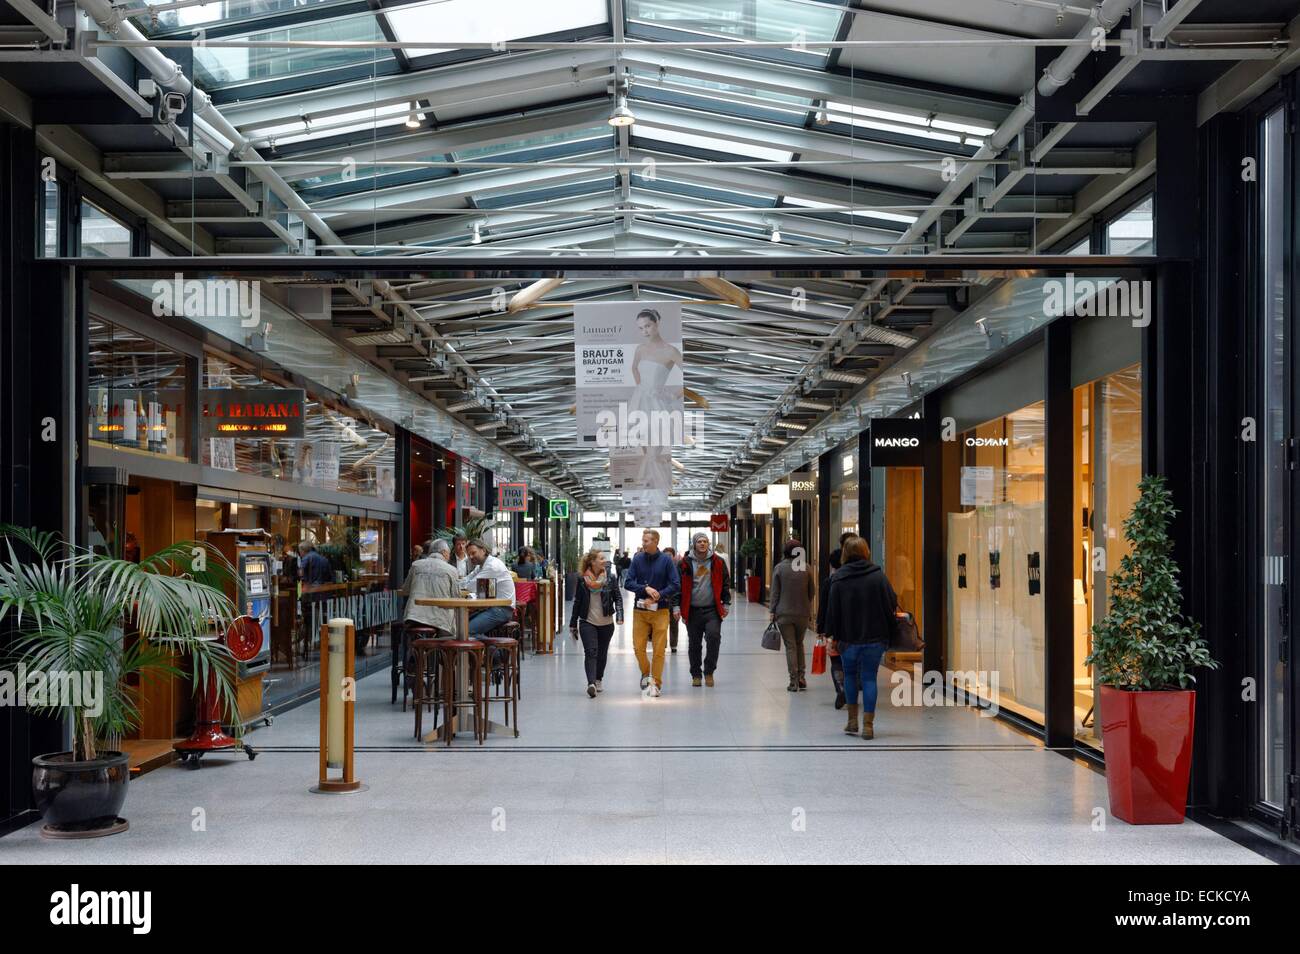 Austria, Tirolo, Innsbruck, Rathaus gallerie shopping mall Foto Stock